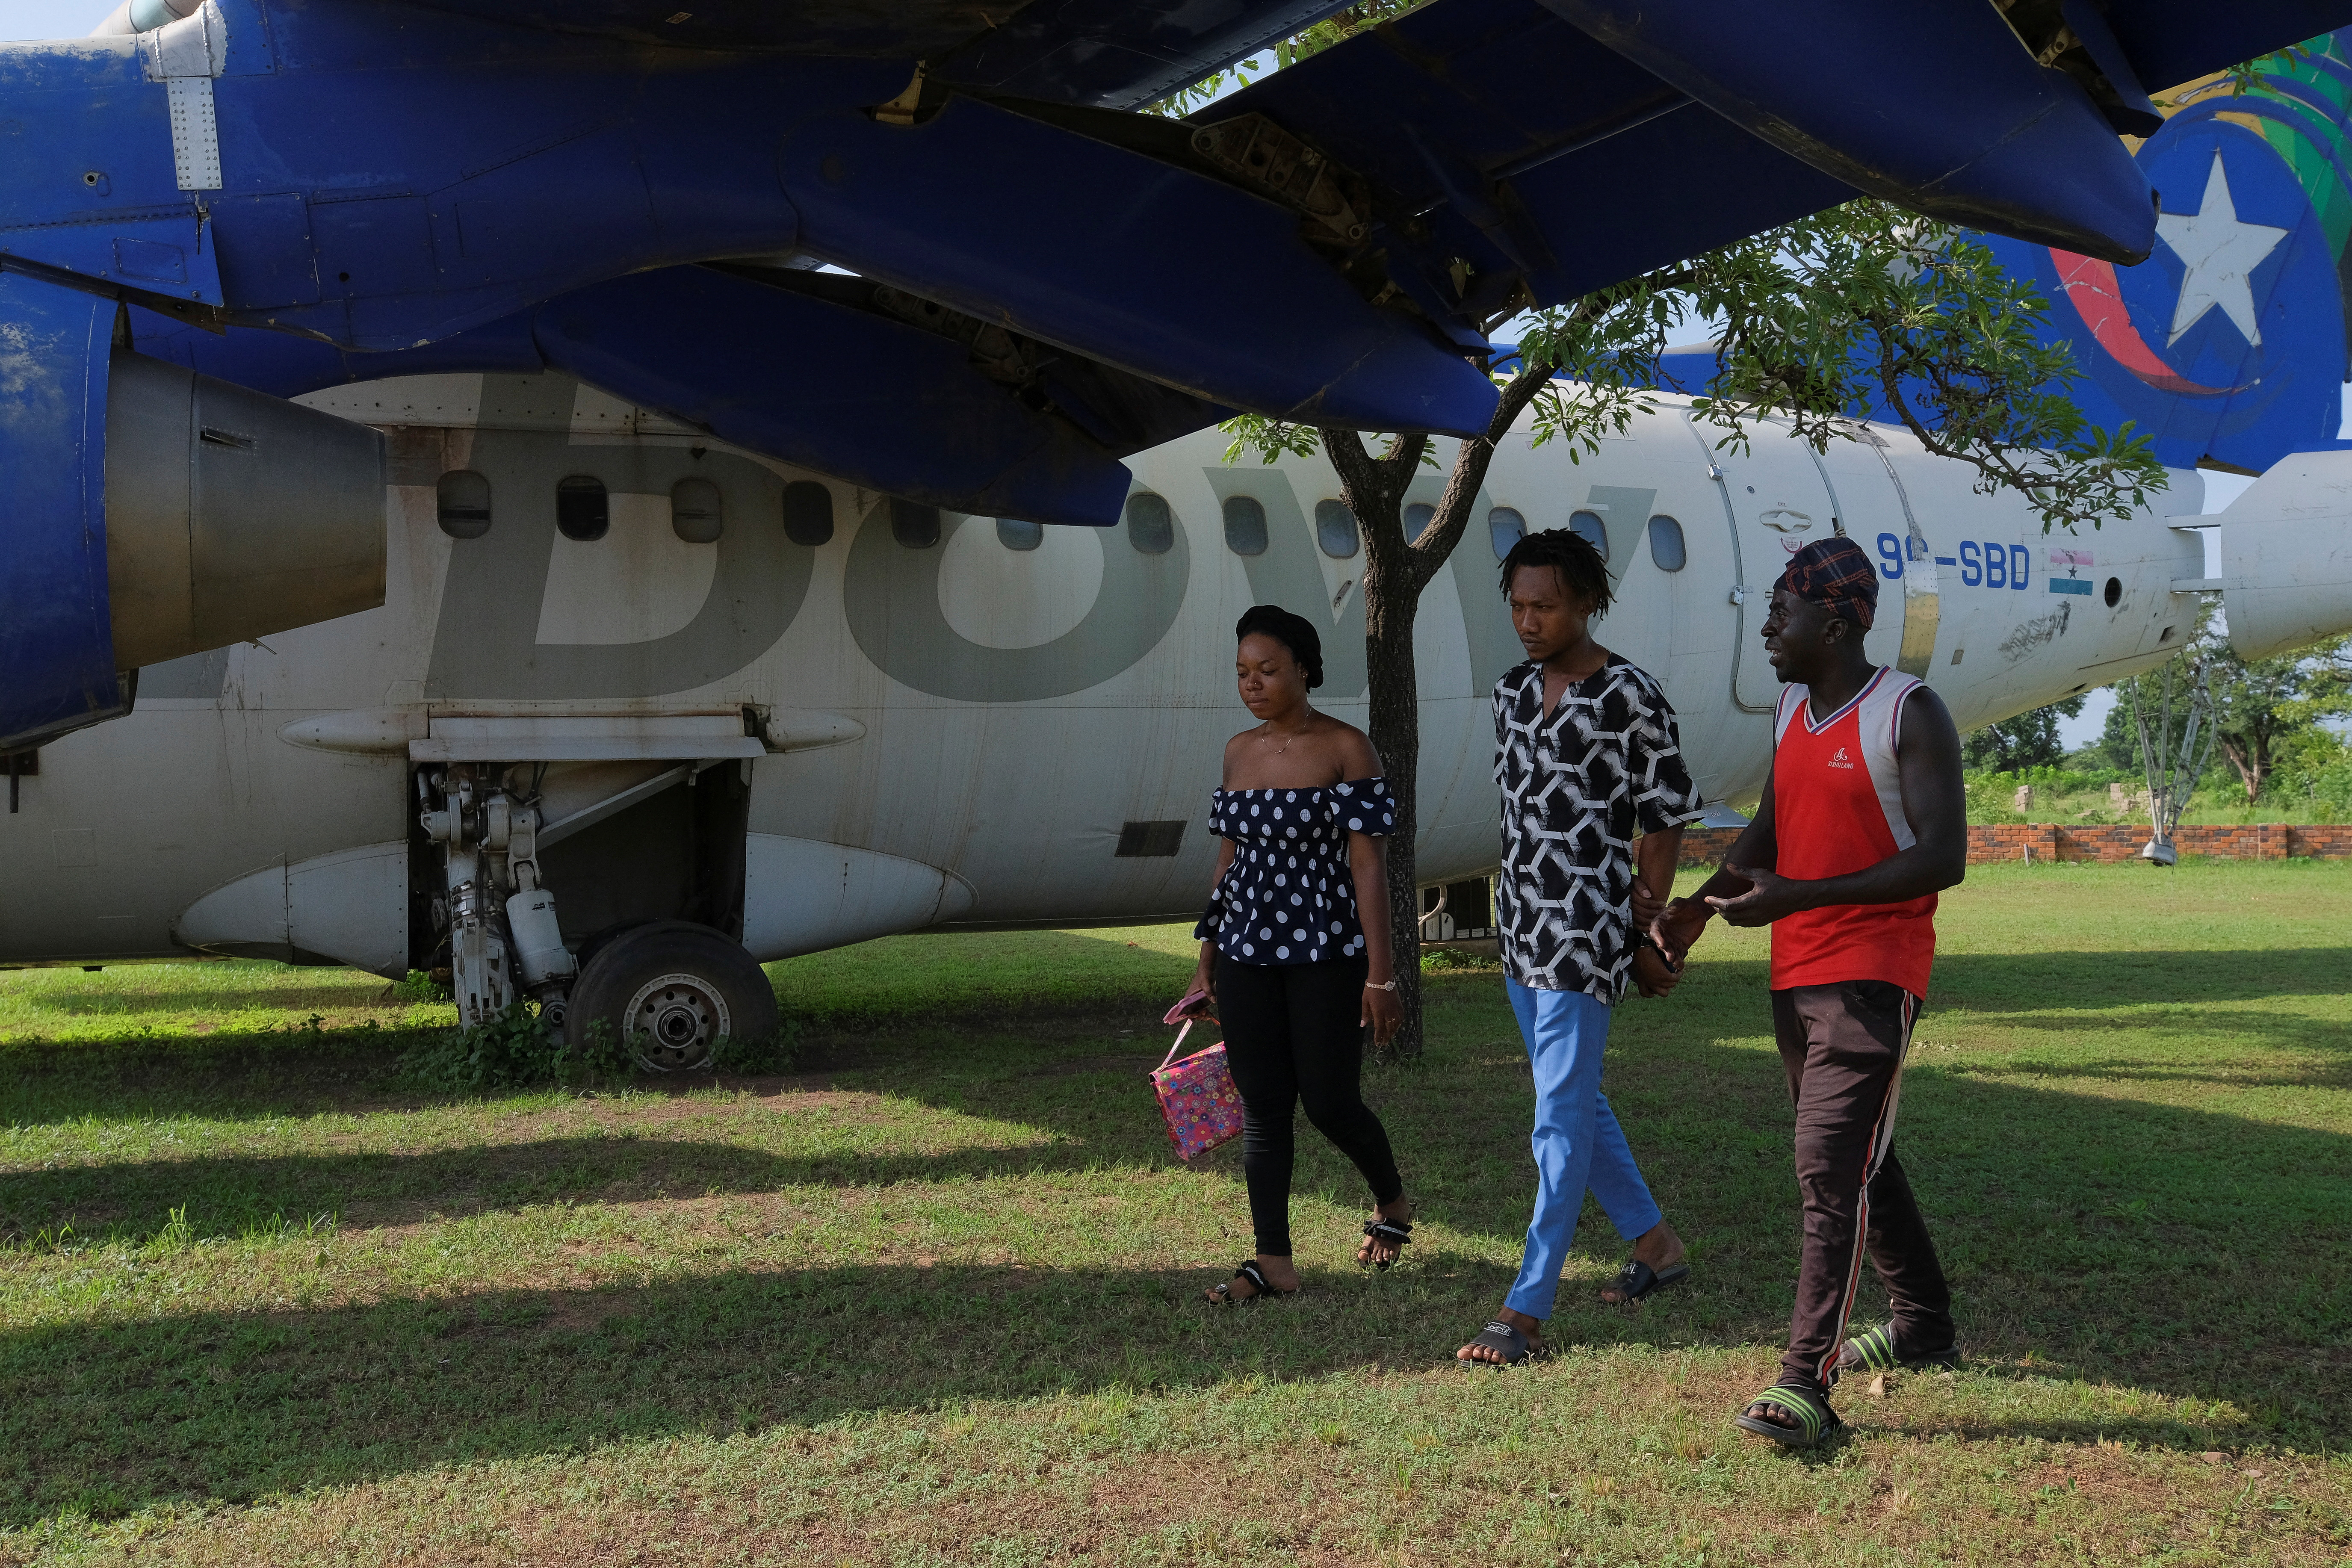 Education takes flight under Ghanaian artist's repurposed planes, in Tamale